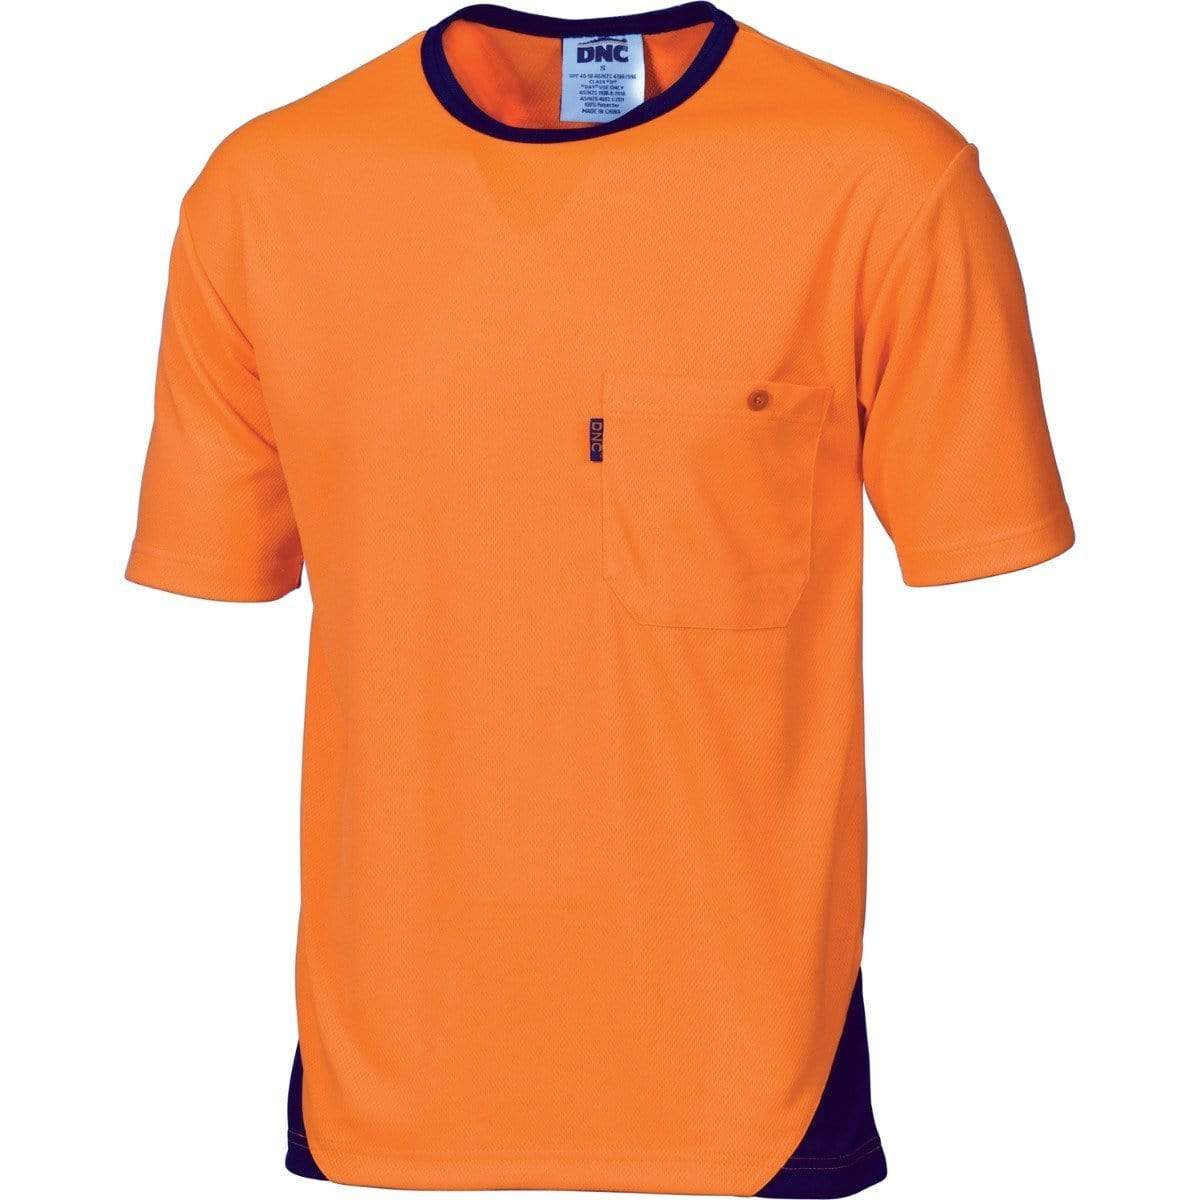 Dnc Workwear Hi-vis Cool-breathe Short Sleeve Tee - 3711 Work Wear DNC Workwear Orange/Navy XS 